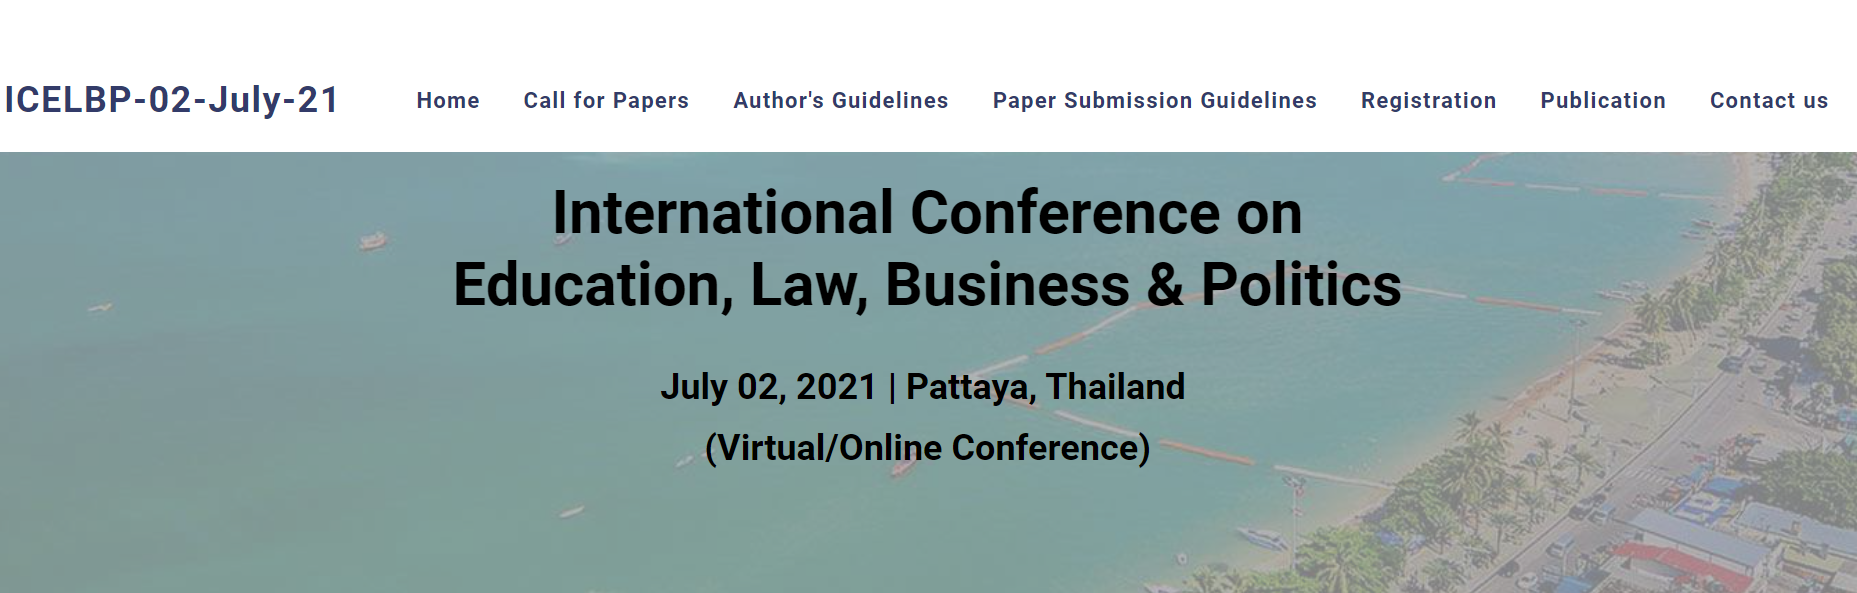 International Conference on Education, Law, Business & Politics, Pattaya, Thailand,Pattaya,Thailand